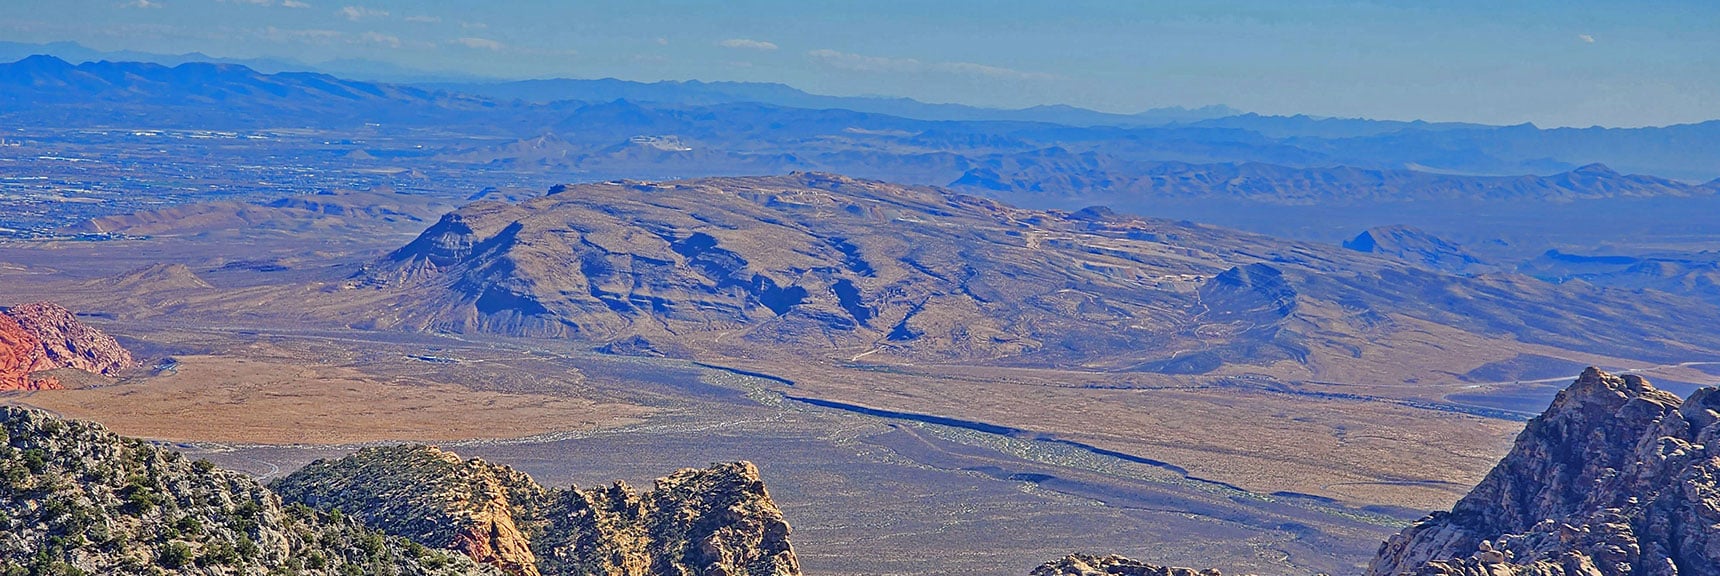 Blue Diamond Mountain from Keystone Thrust Summit | Keystone Thrust West Summit Above White Rock Mountain | La Madre Mountains Wilderness, Nevada